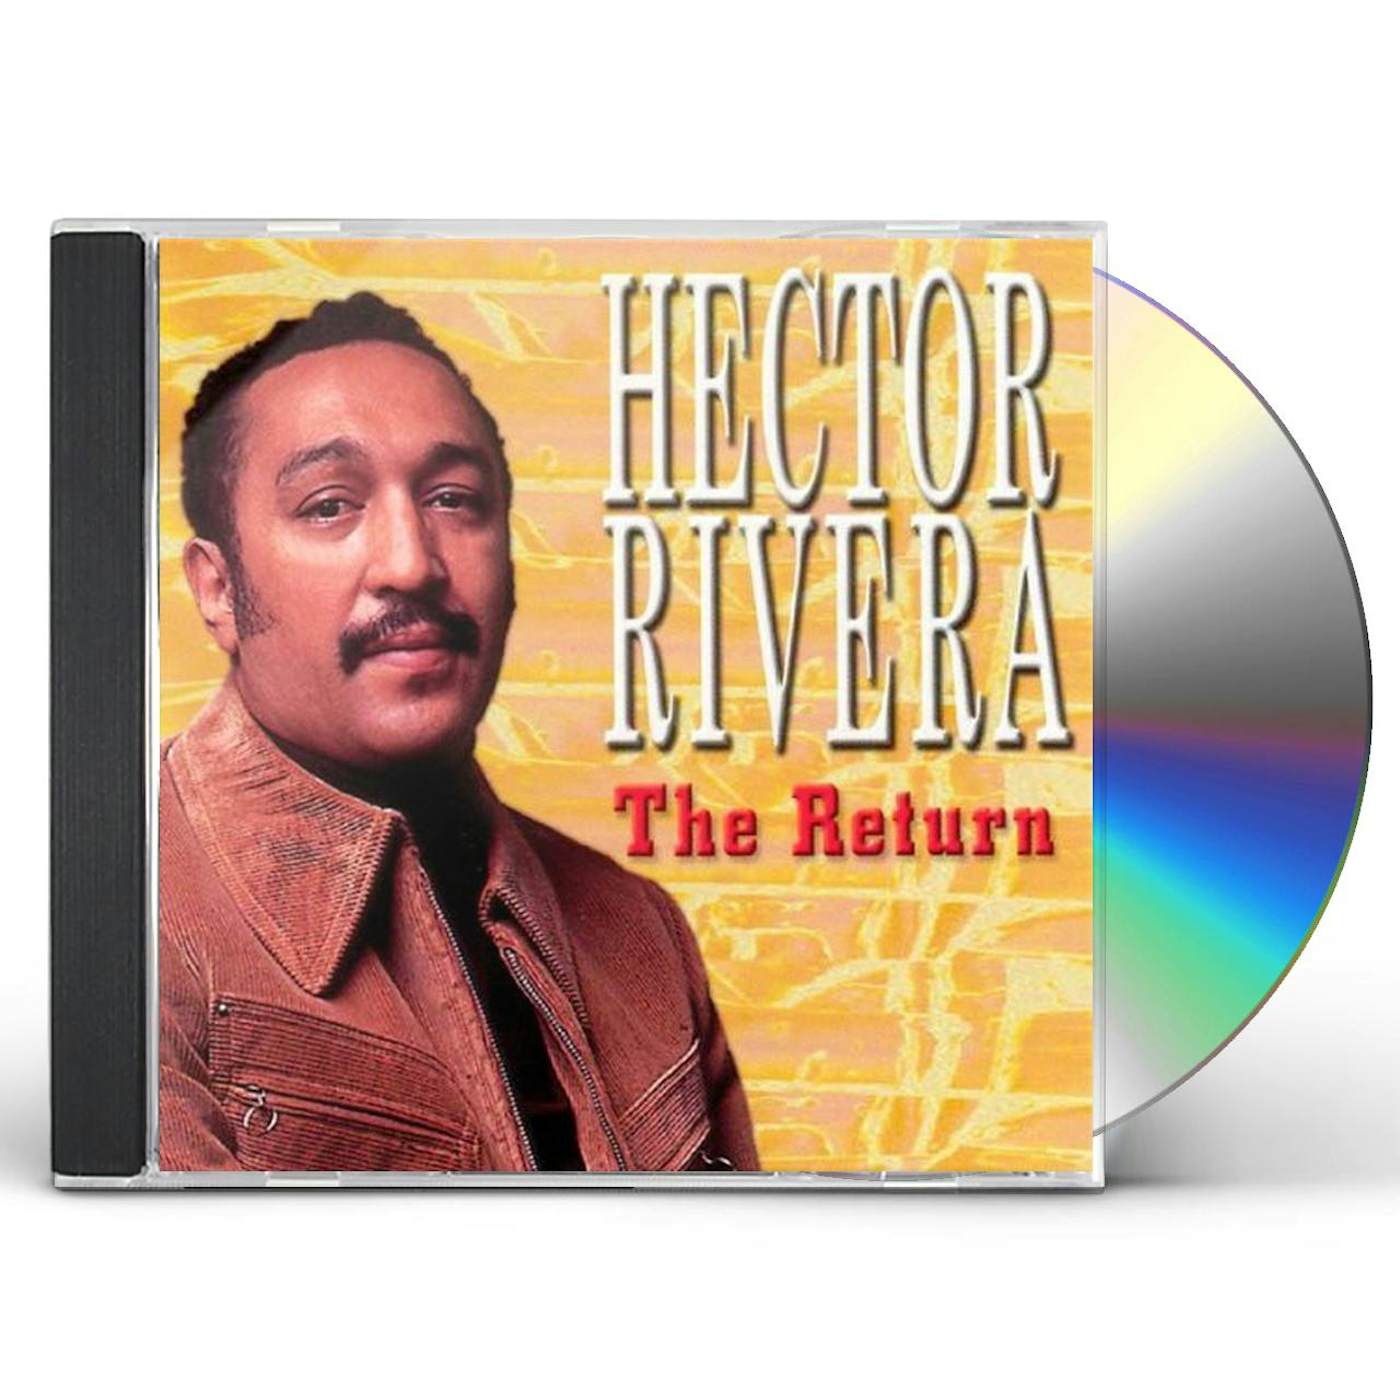 HECTOR RIVERA CD